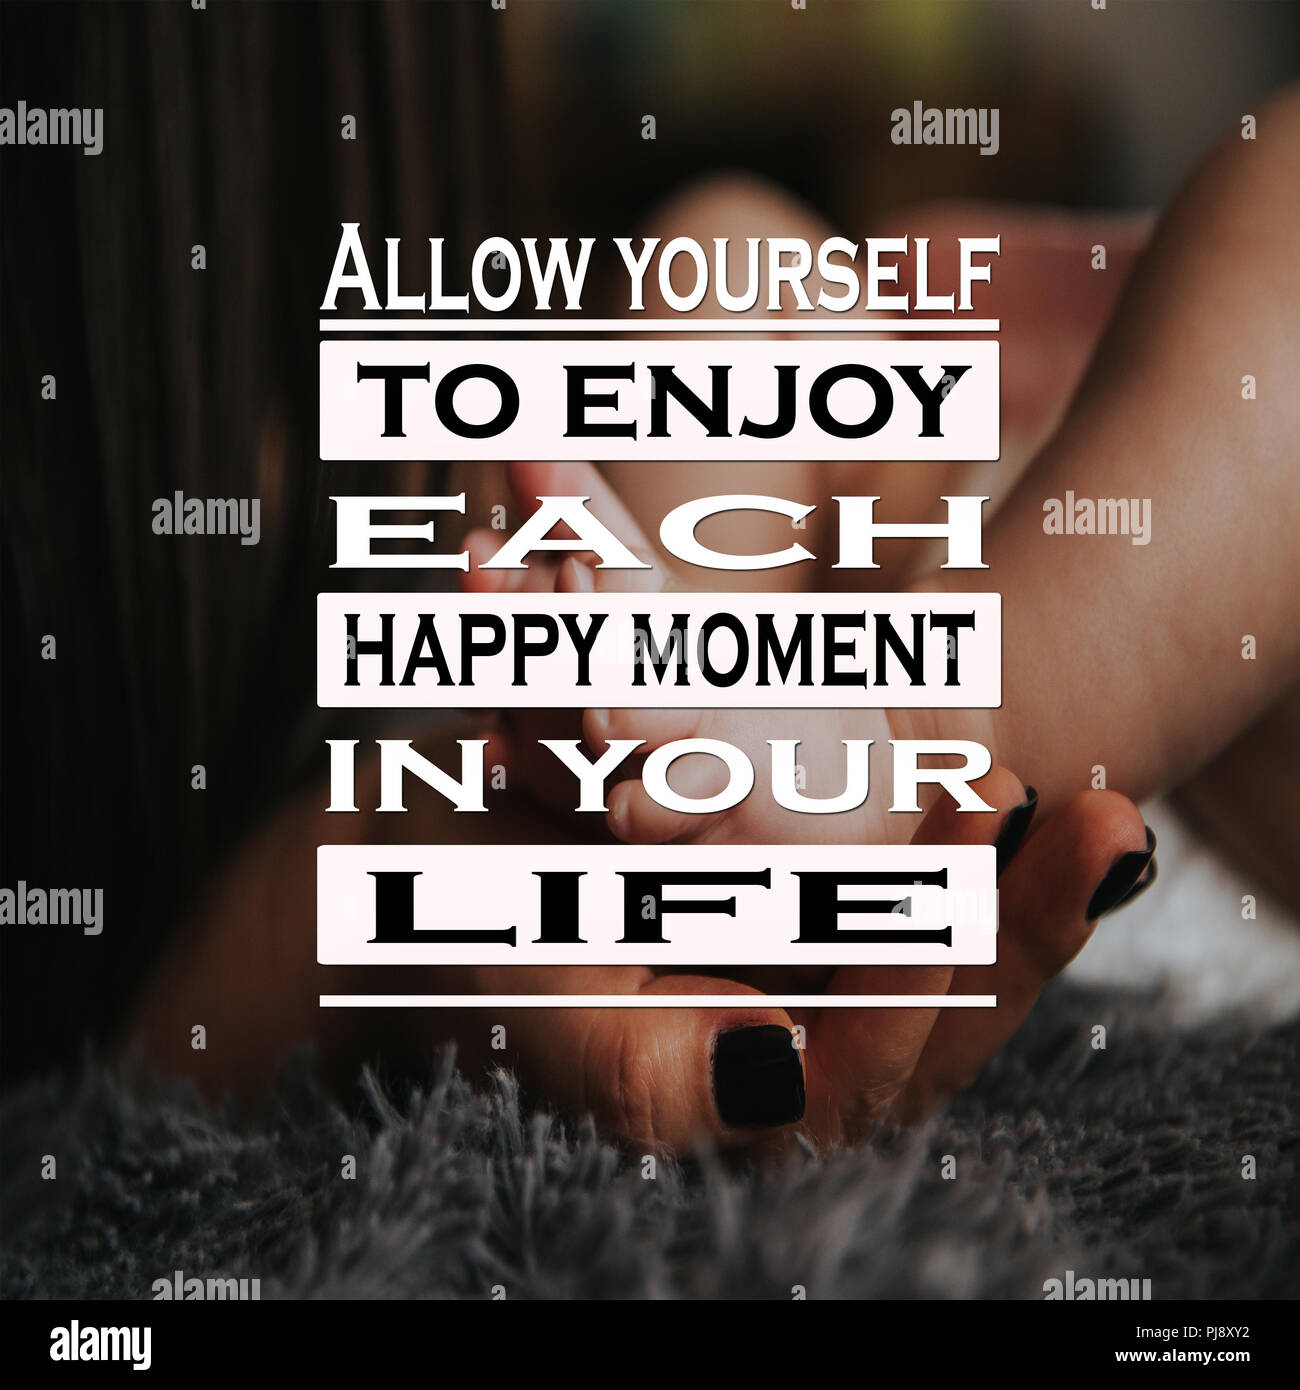 Allow yourself to enjoy yourself. – www.